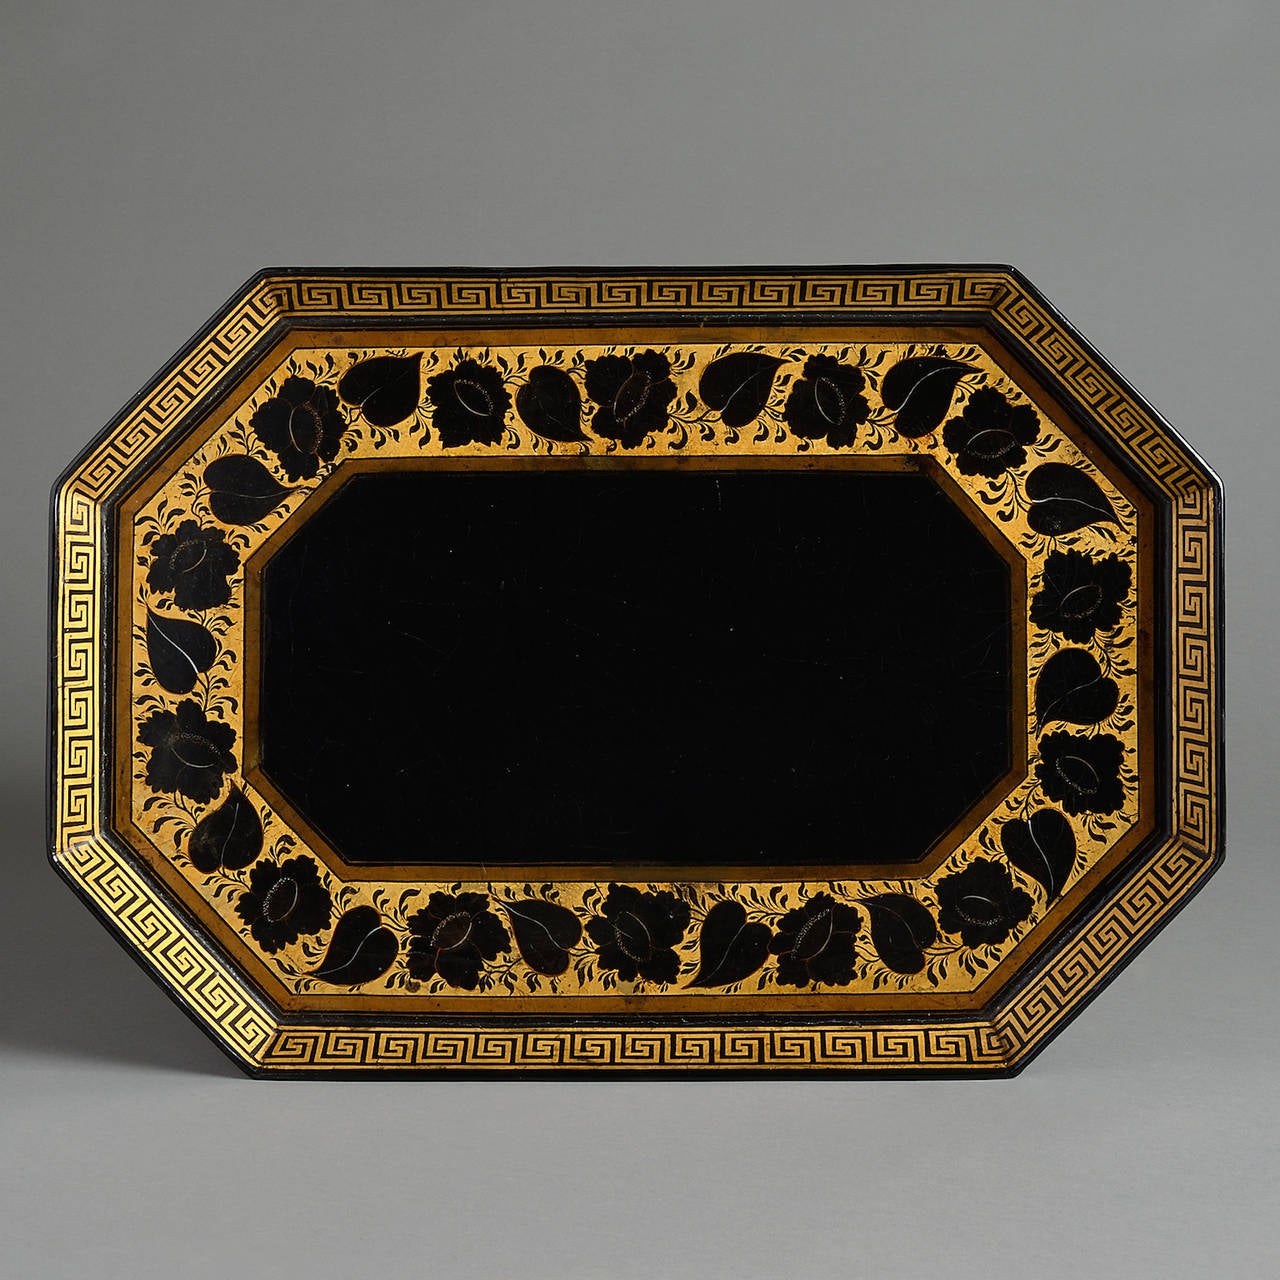 A fine Regency papier machè tray with gilt and ebonized decoration, circa 1815
Stamped 